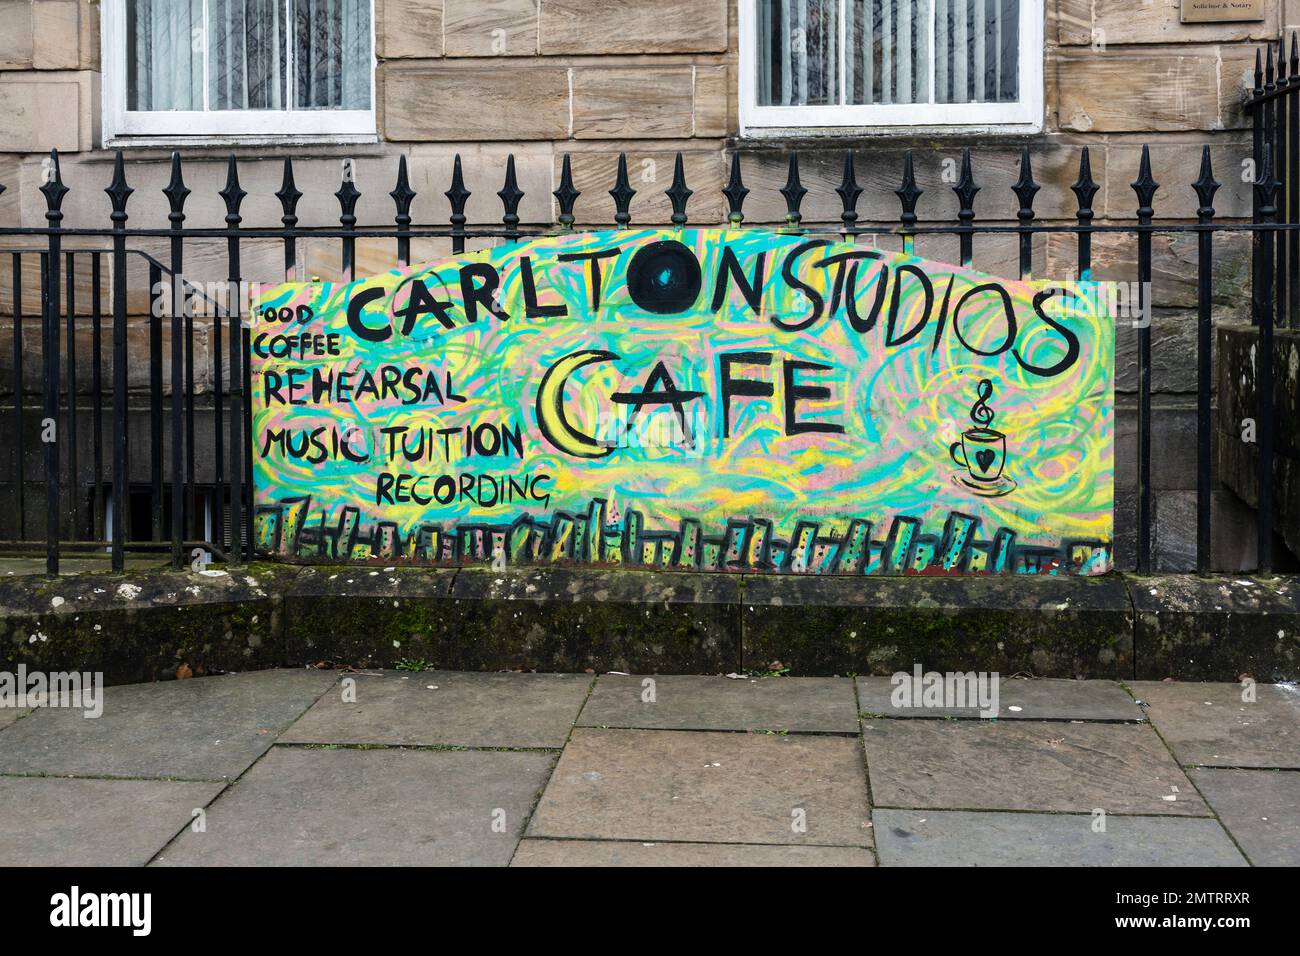 Carlton Studios and Cafe sign, Carlton Place, Glasgow, Scotland, UK, Europe Stock Photo